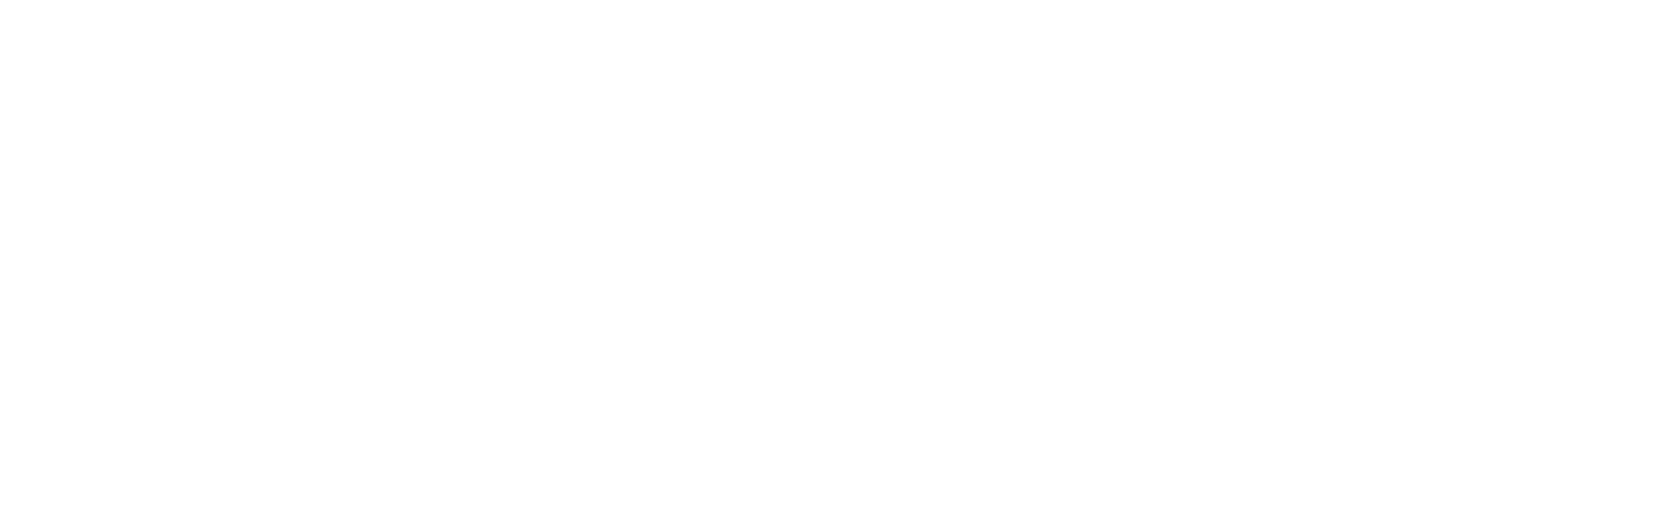 KCOE-PINION-HORIZ-WHITE (1)